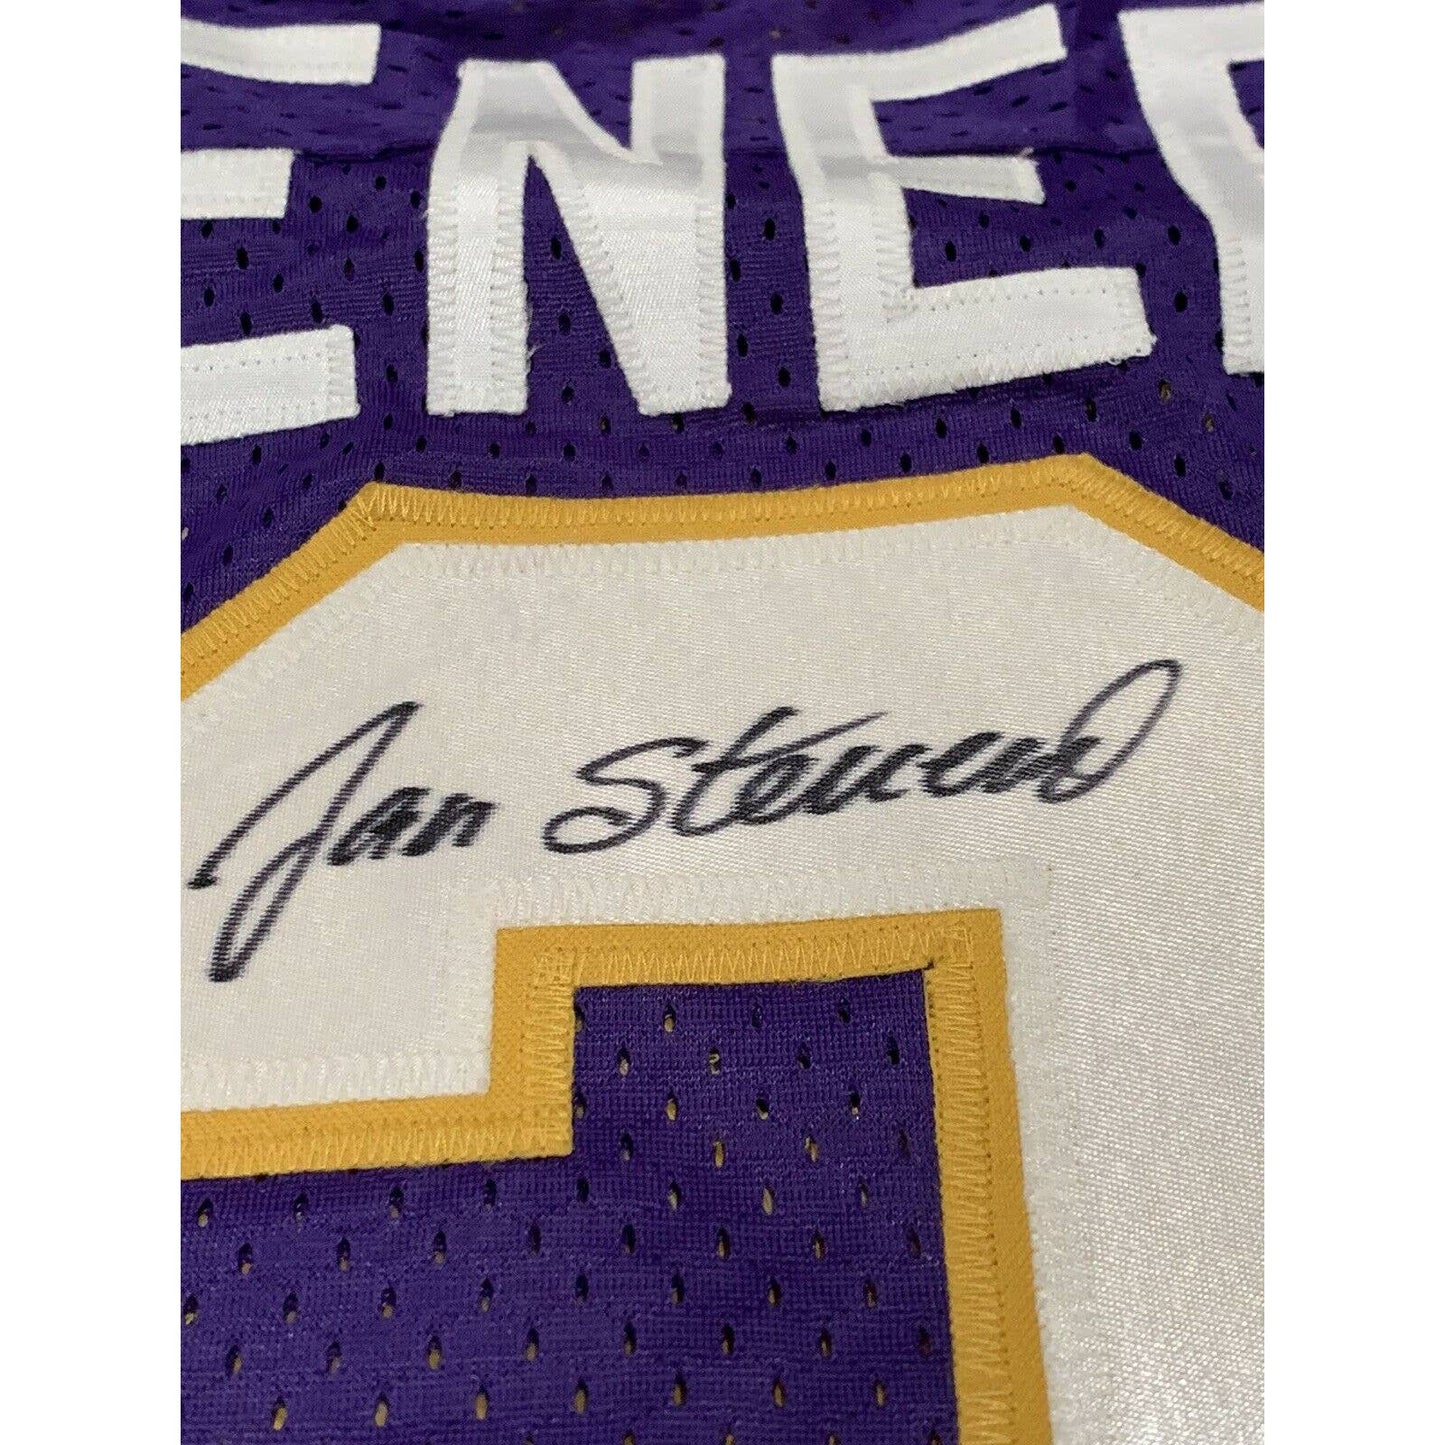 Jan Stenerud Autographed/Signed YouthJersey Minnesota Vikings HOF Youth Size - TreasuresEvolved